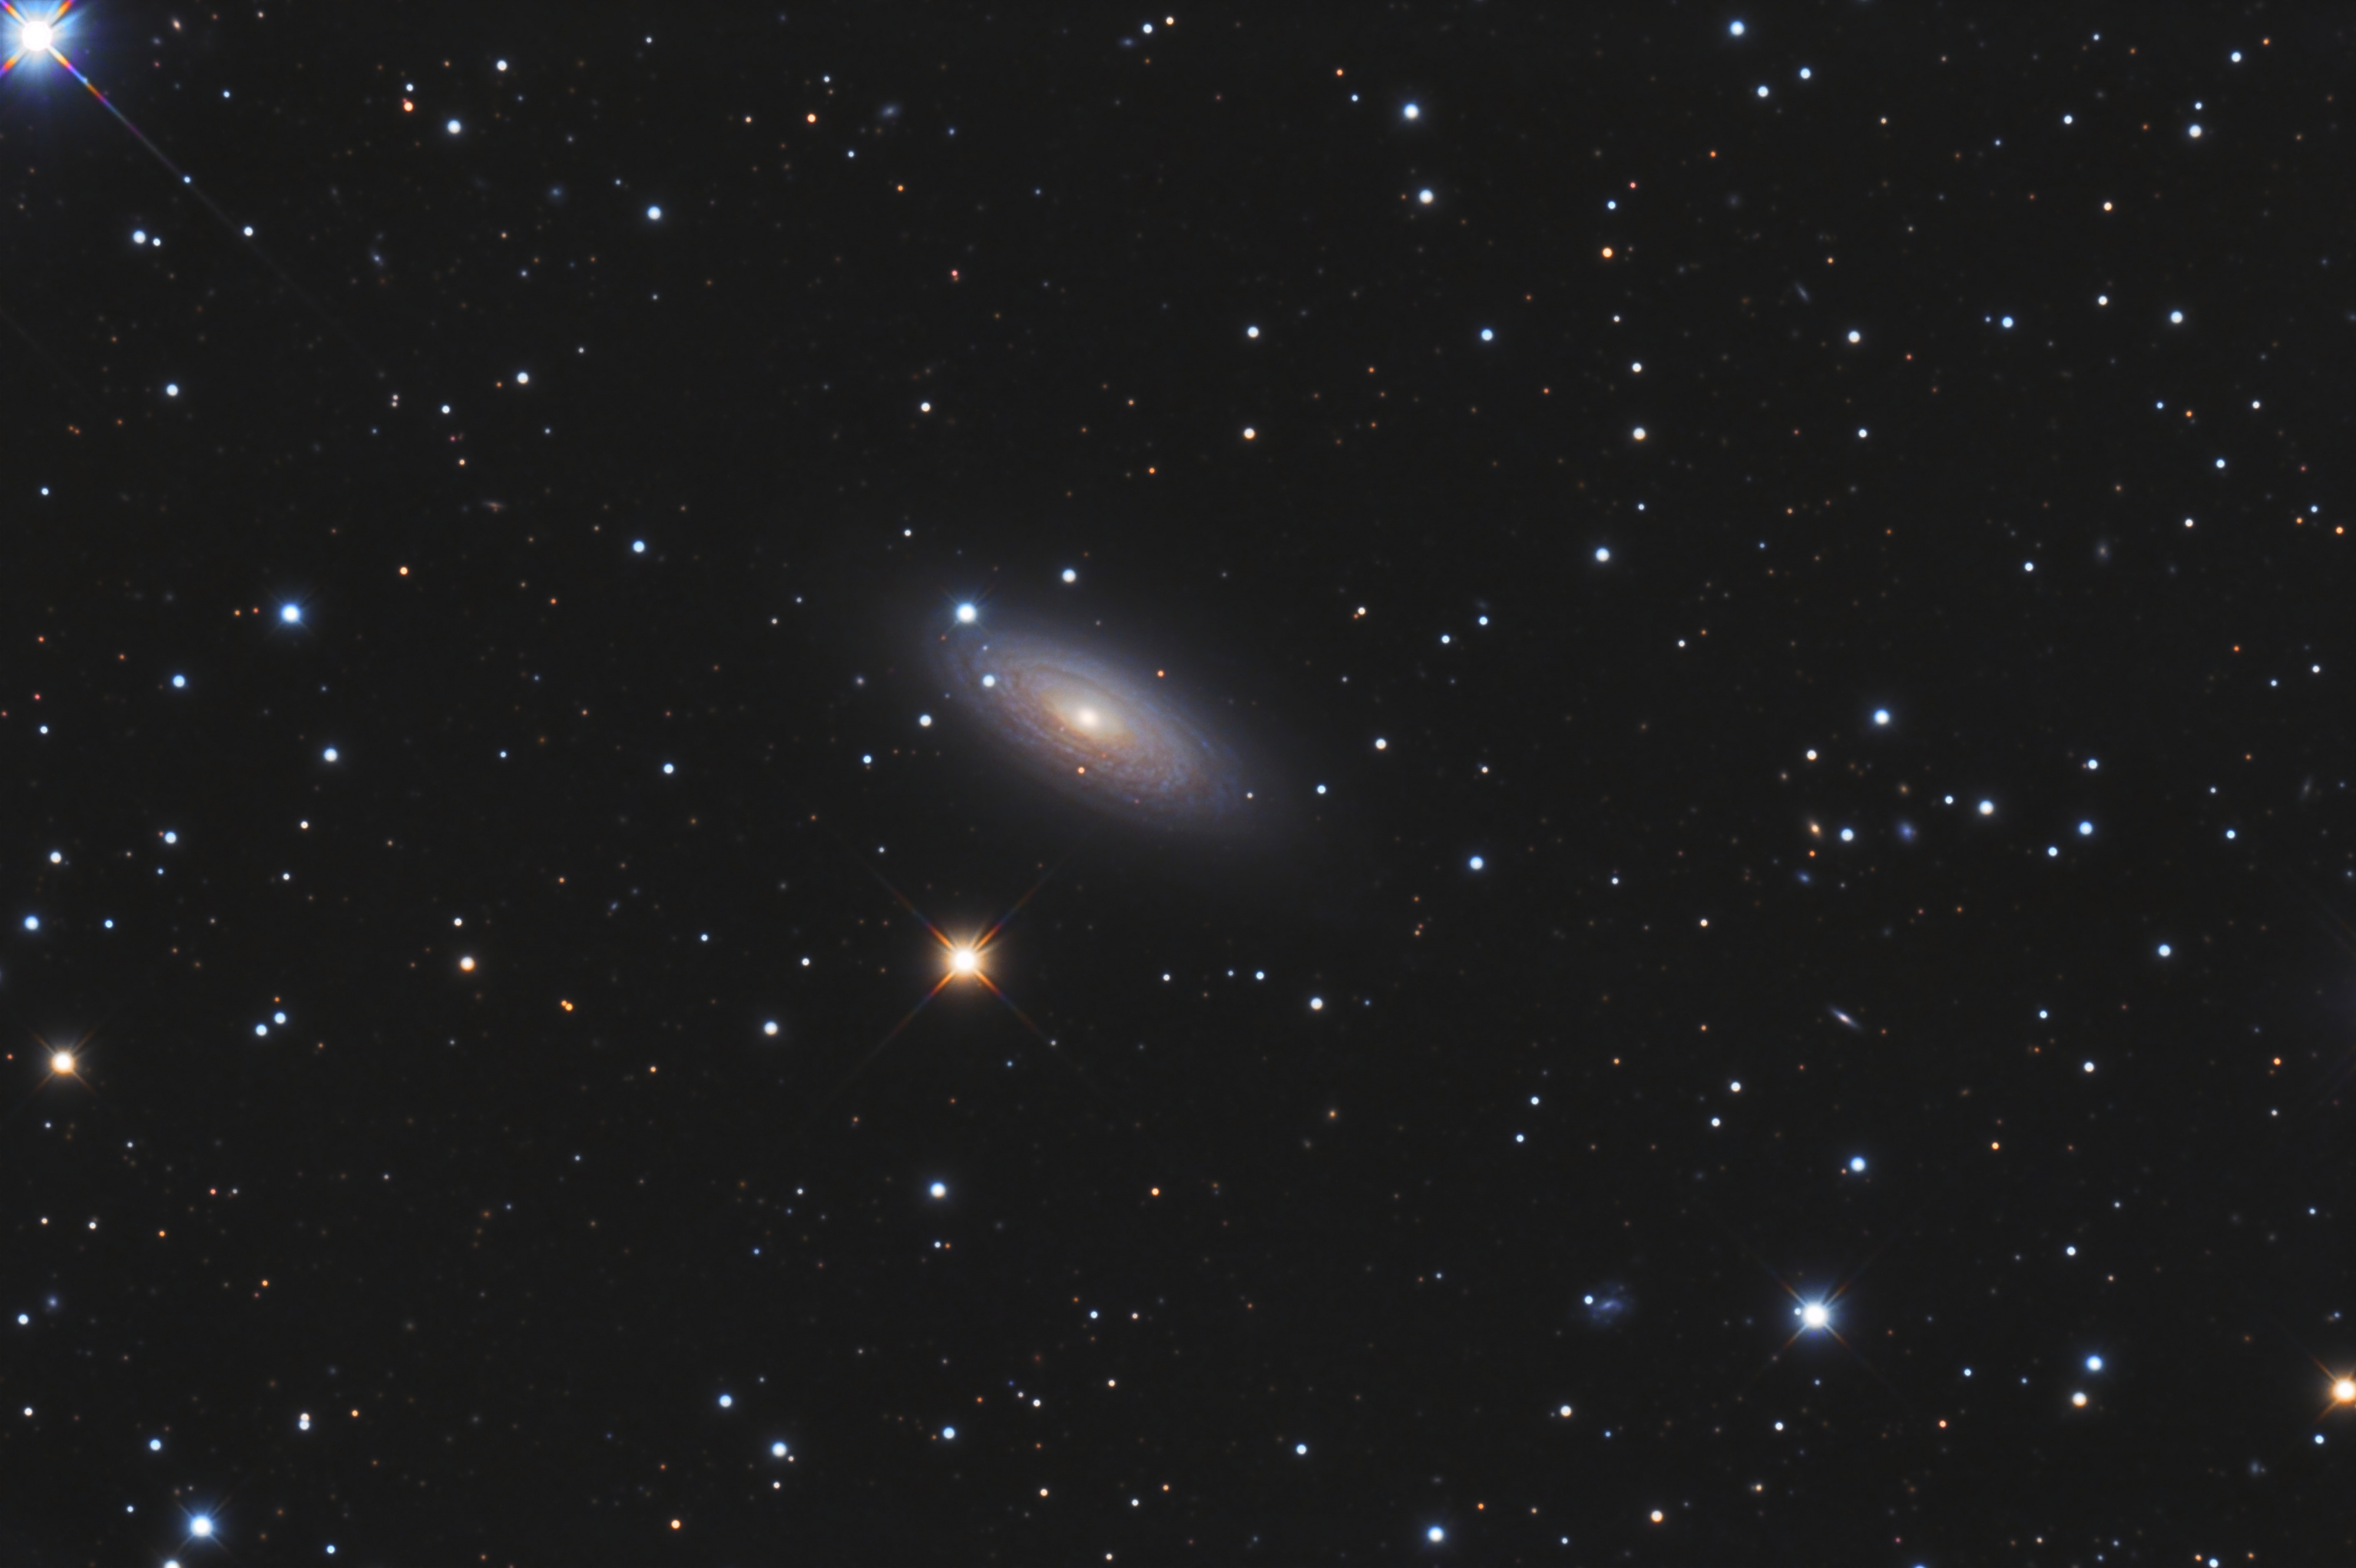 NGC 2841 (Galaxie de l'oeil du tigre)